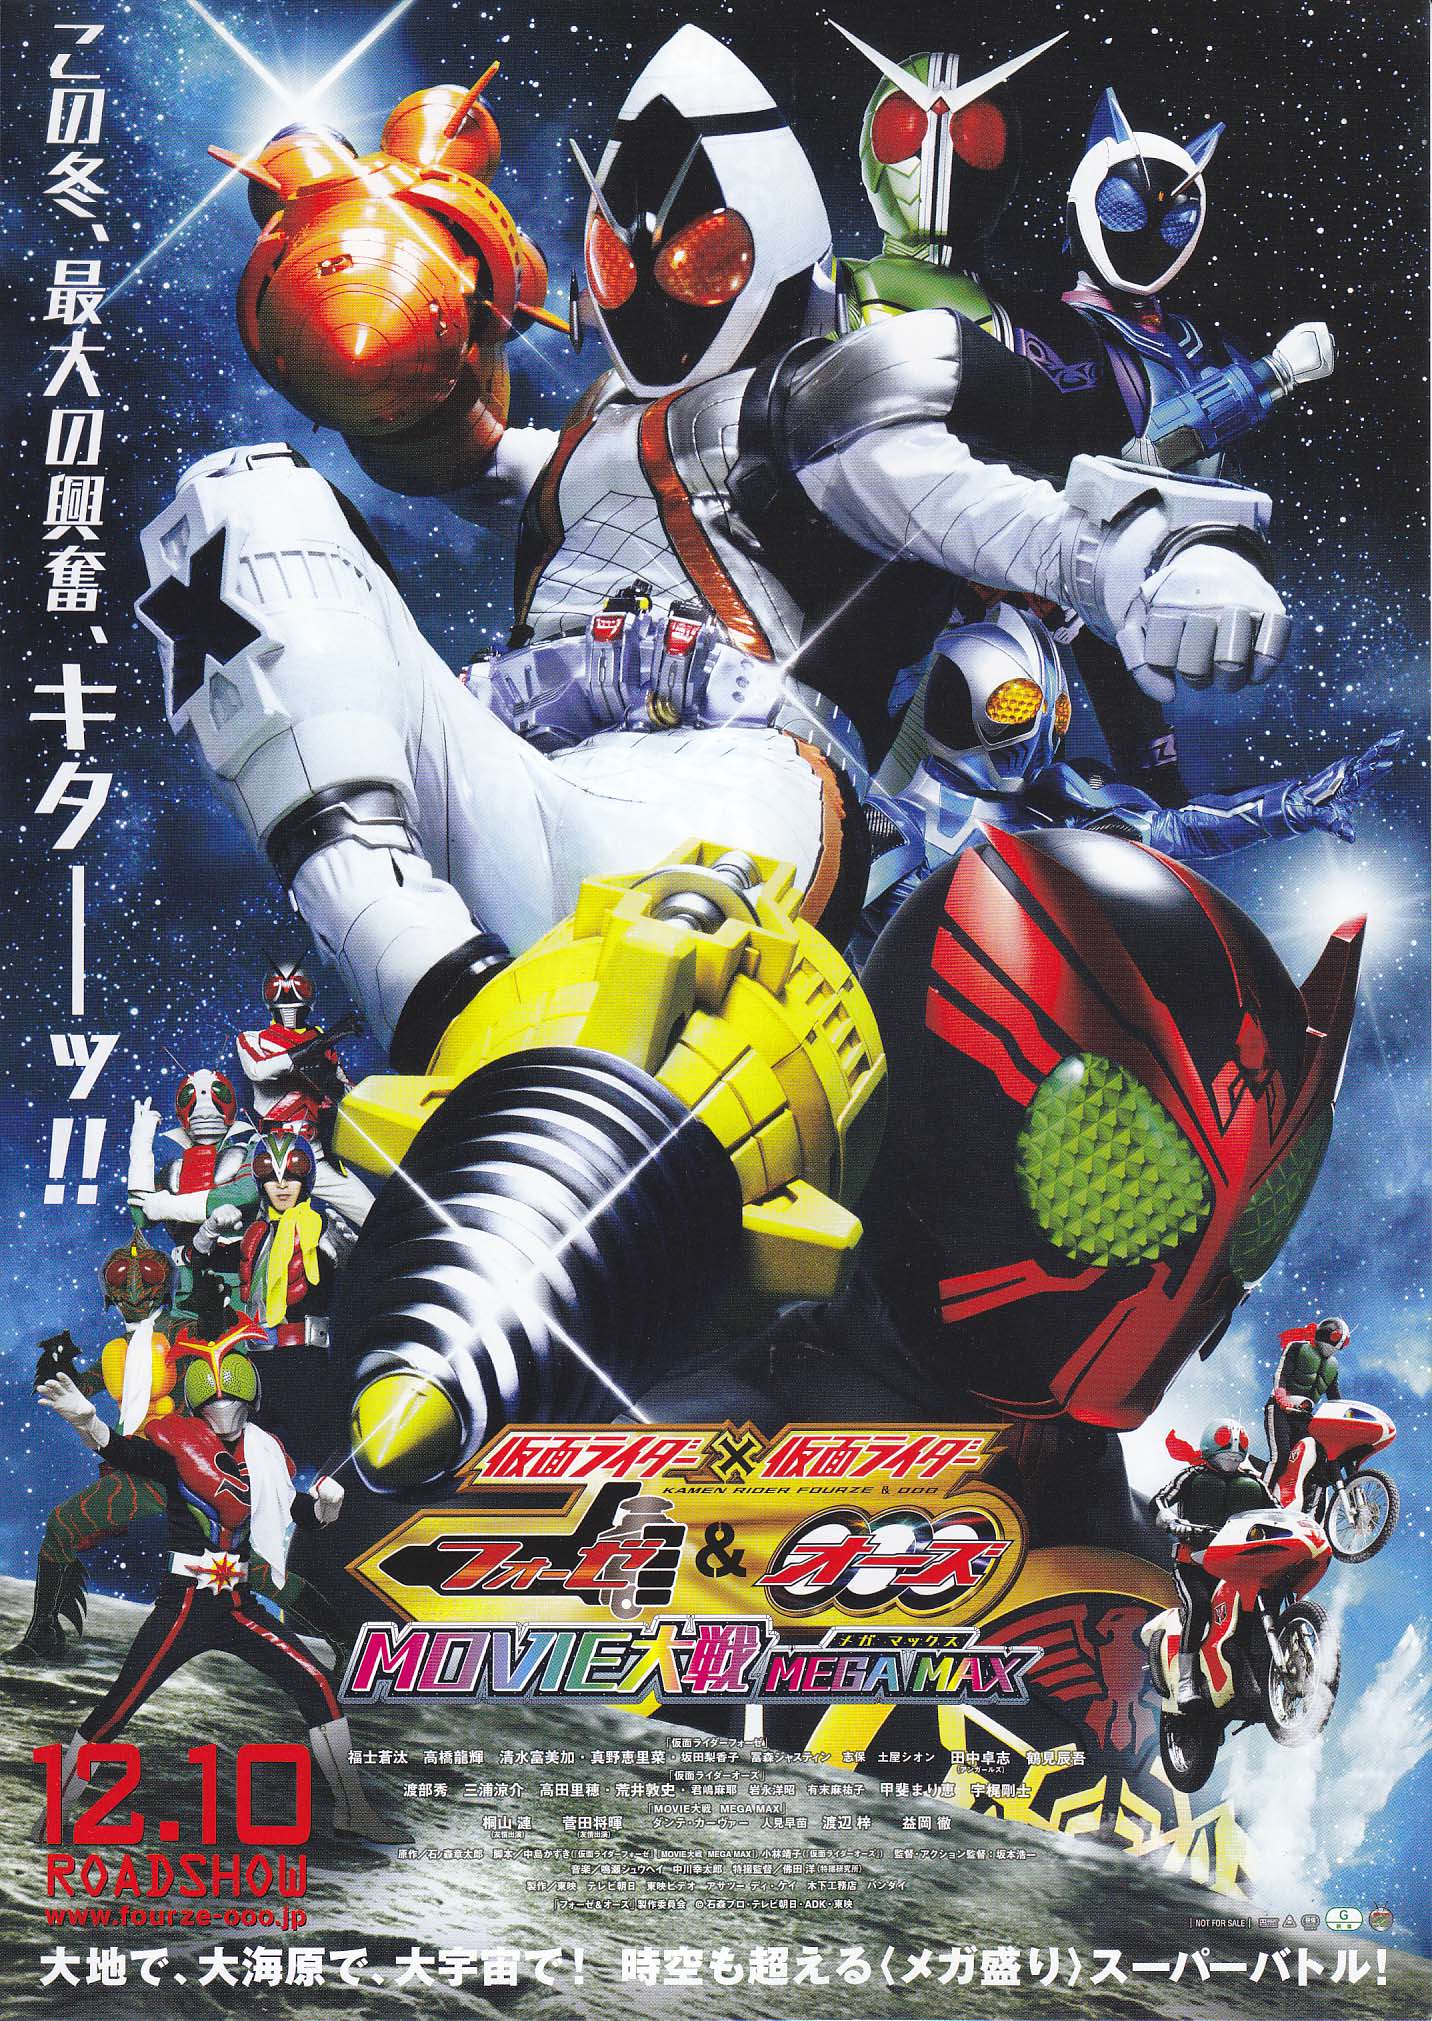 Kamen Rider X Kamen Rider Fourze & Ooo: Movie War Mega Max